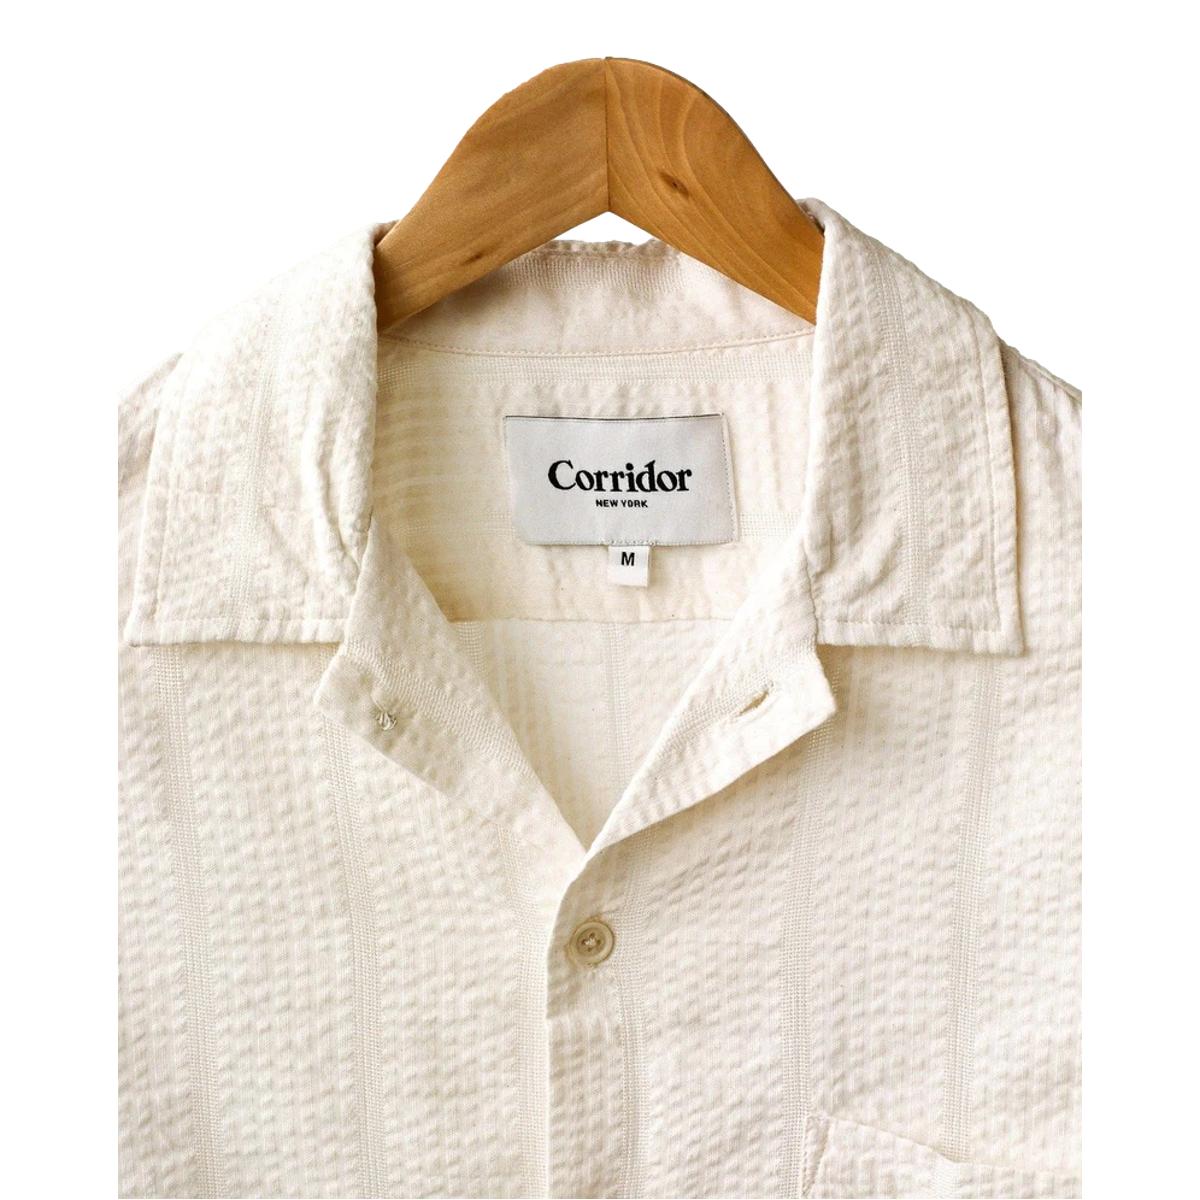 Striped Seersucker Short Sleeve White - Shirt